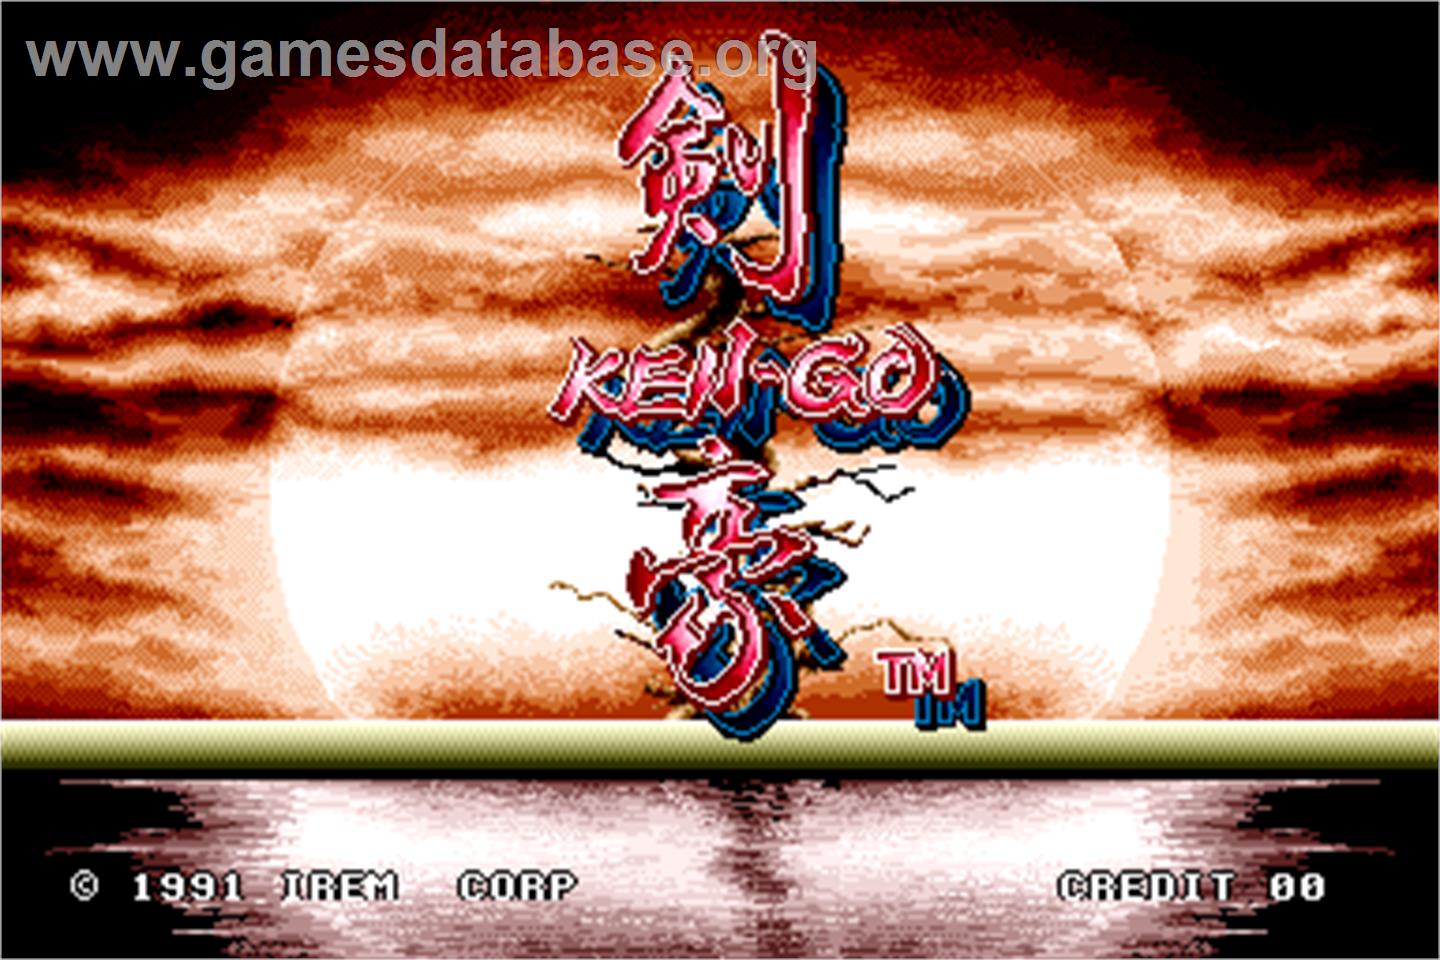 Ken-Go - Arcade - Artwork - Title Screen